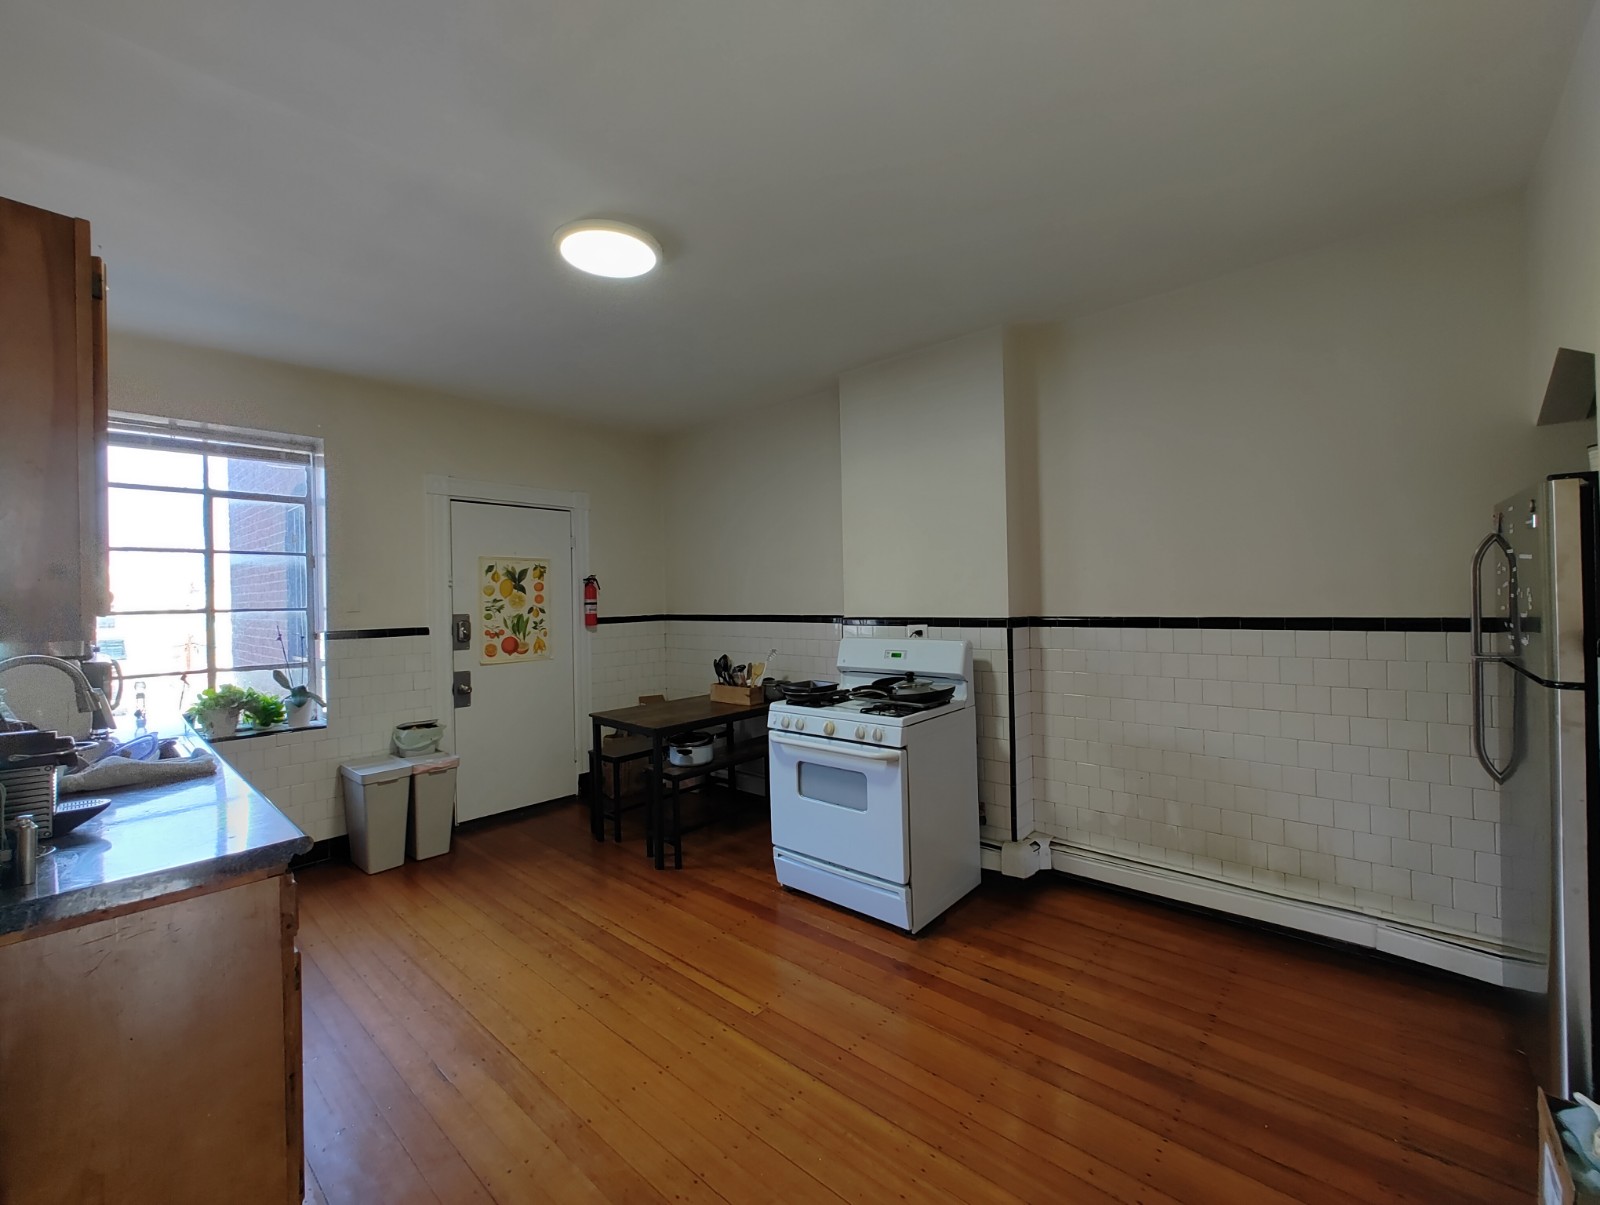 Photos of apartment on Cambridge St.,Cambridge MA 02141